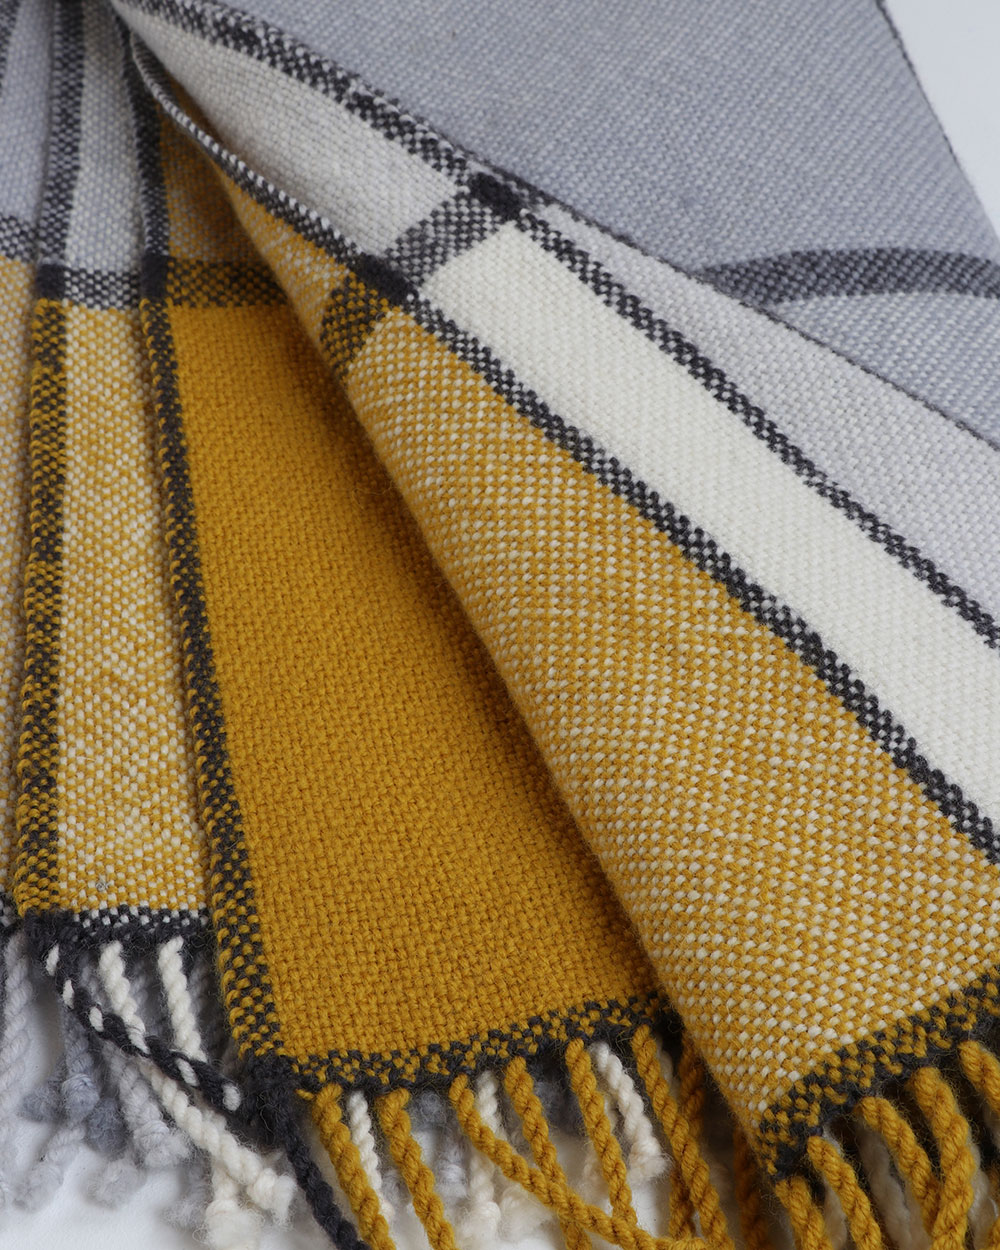 ashford handicrafts - Big Blanket, Little Loom!